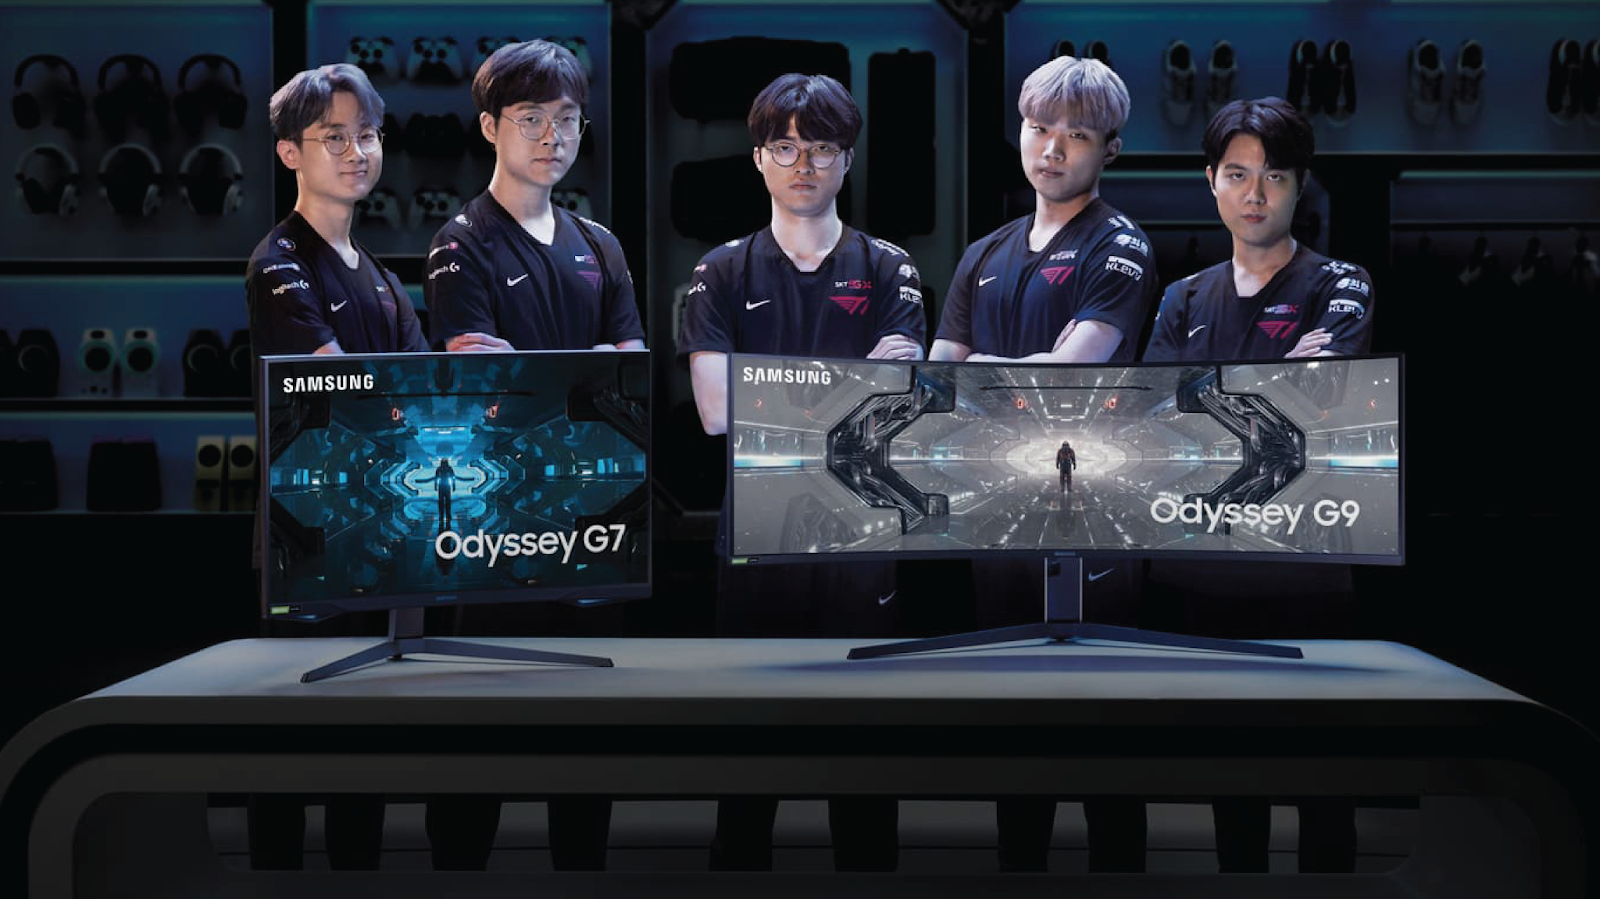 Players experience. Samsung Sponsorship. Два Samsung Odyssey g7. Odyssey g9. Самсунг Спонсор Rivals.